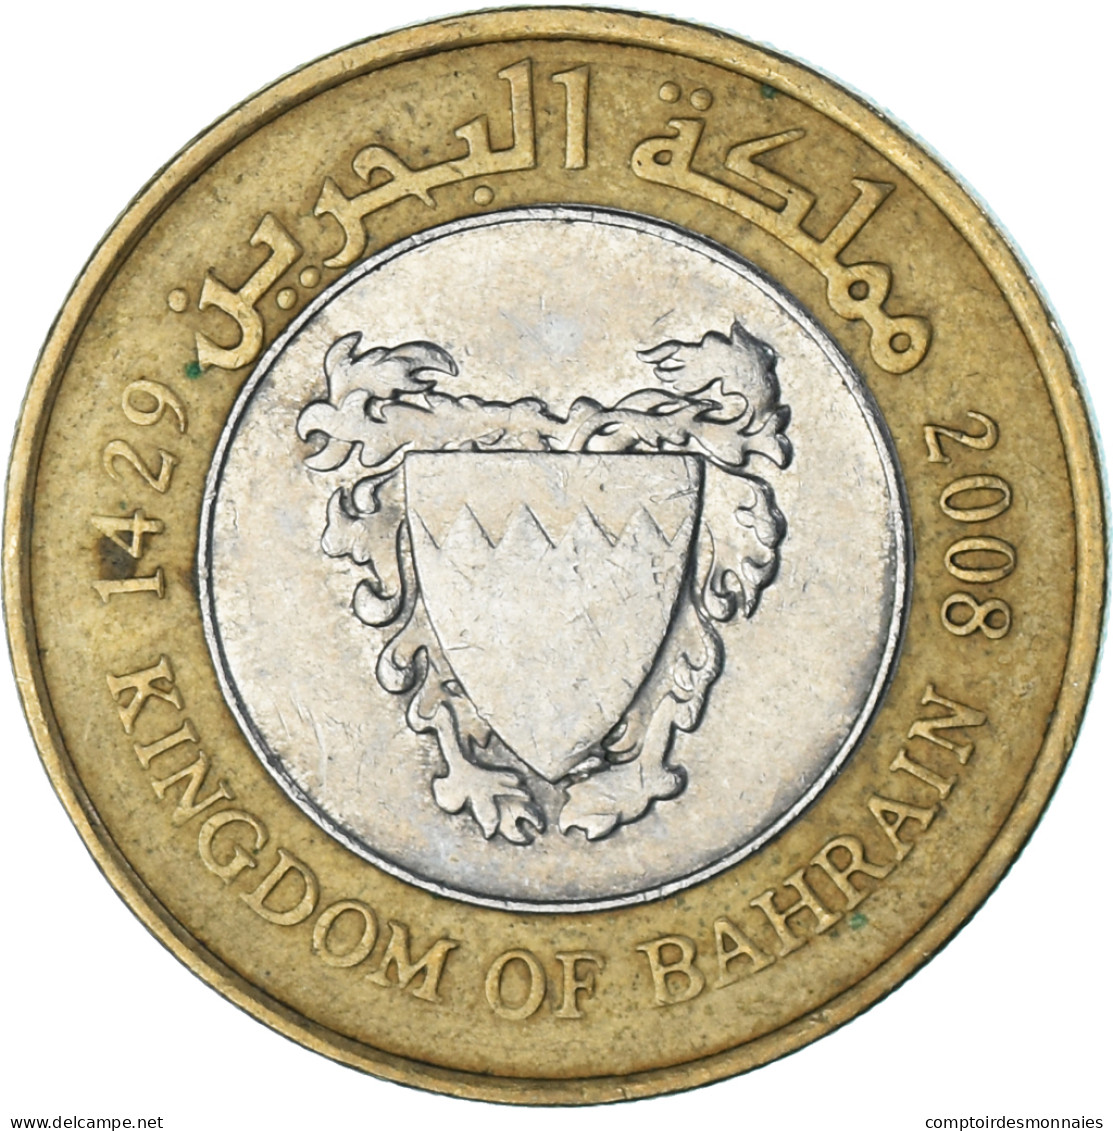 Monnaie, Bahrain, 100 Fils, 2008 - Bahrain